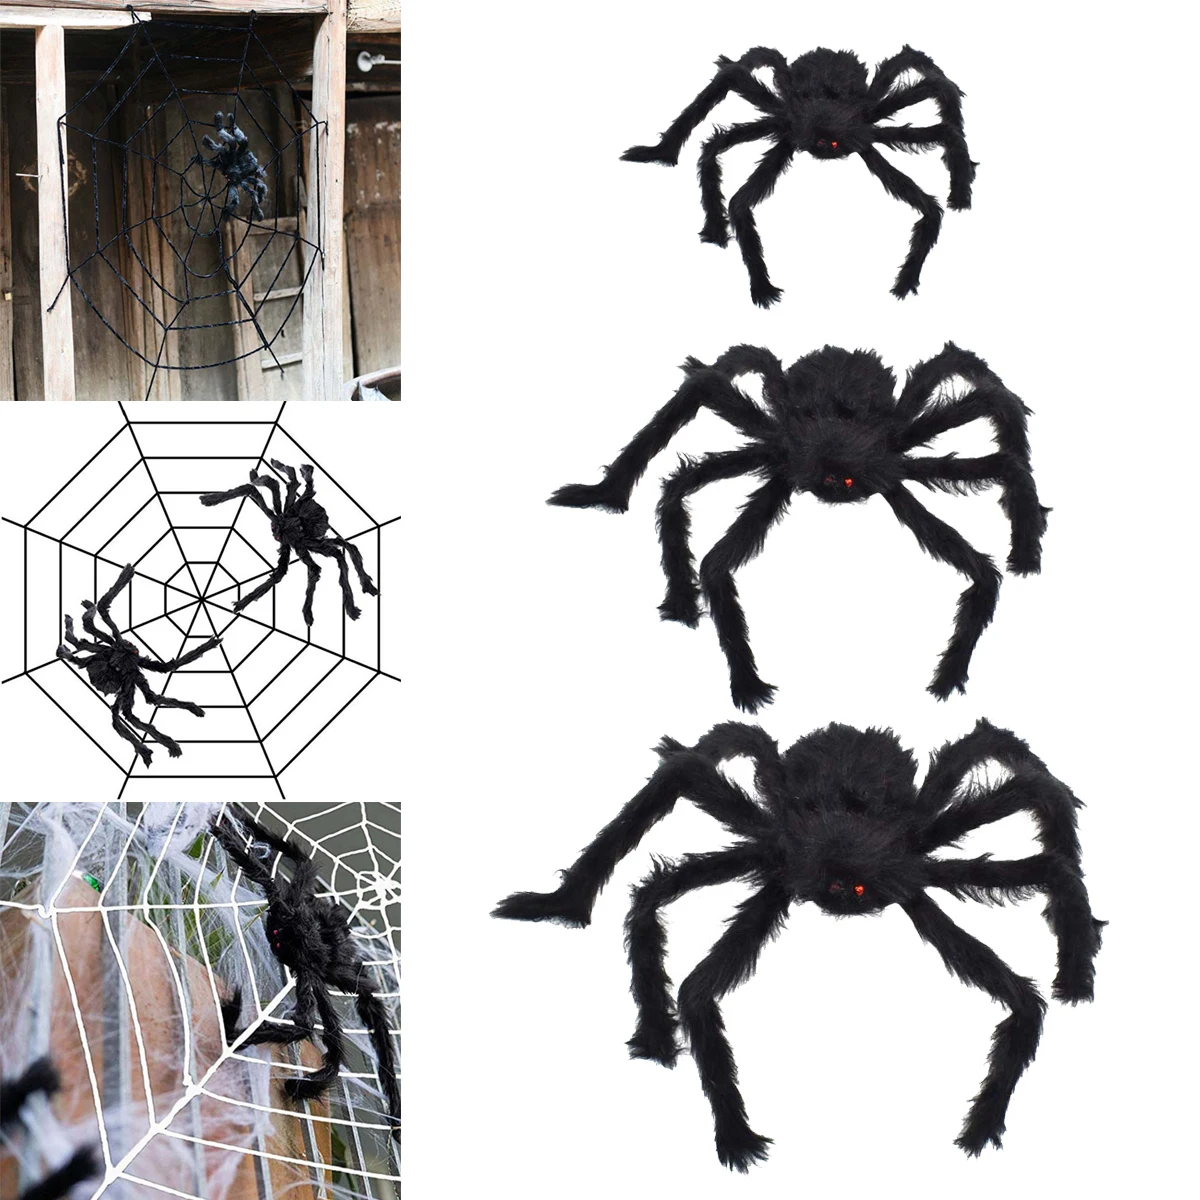 

Halloween Spider Web Plush Simulation Spider Toys Haunted House Bar Decoration Props Black Big Spider